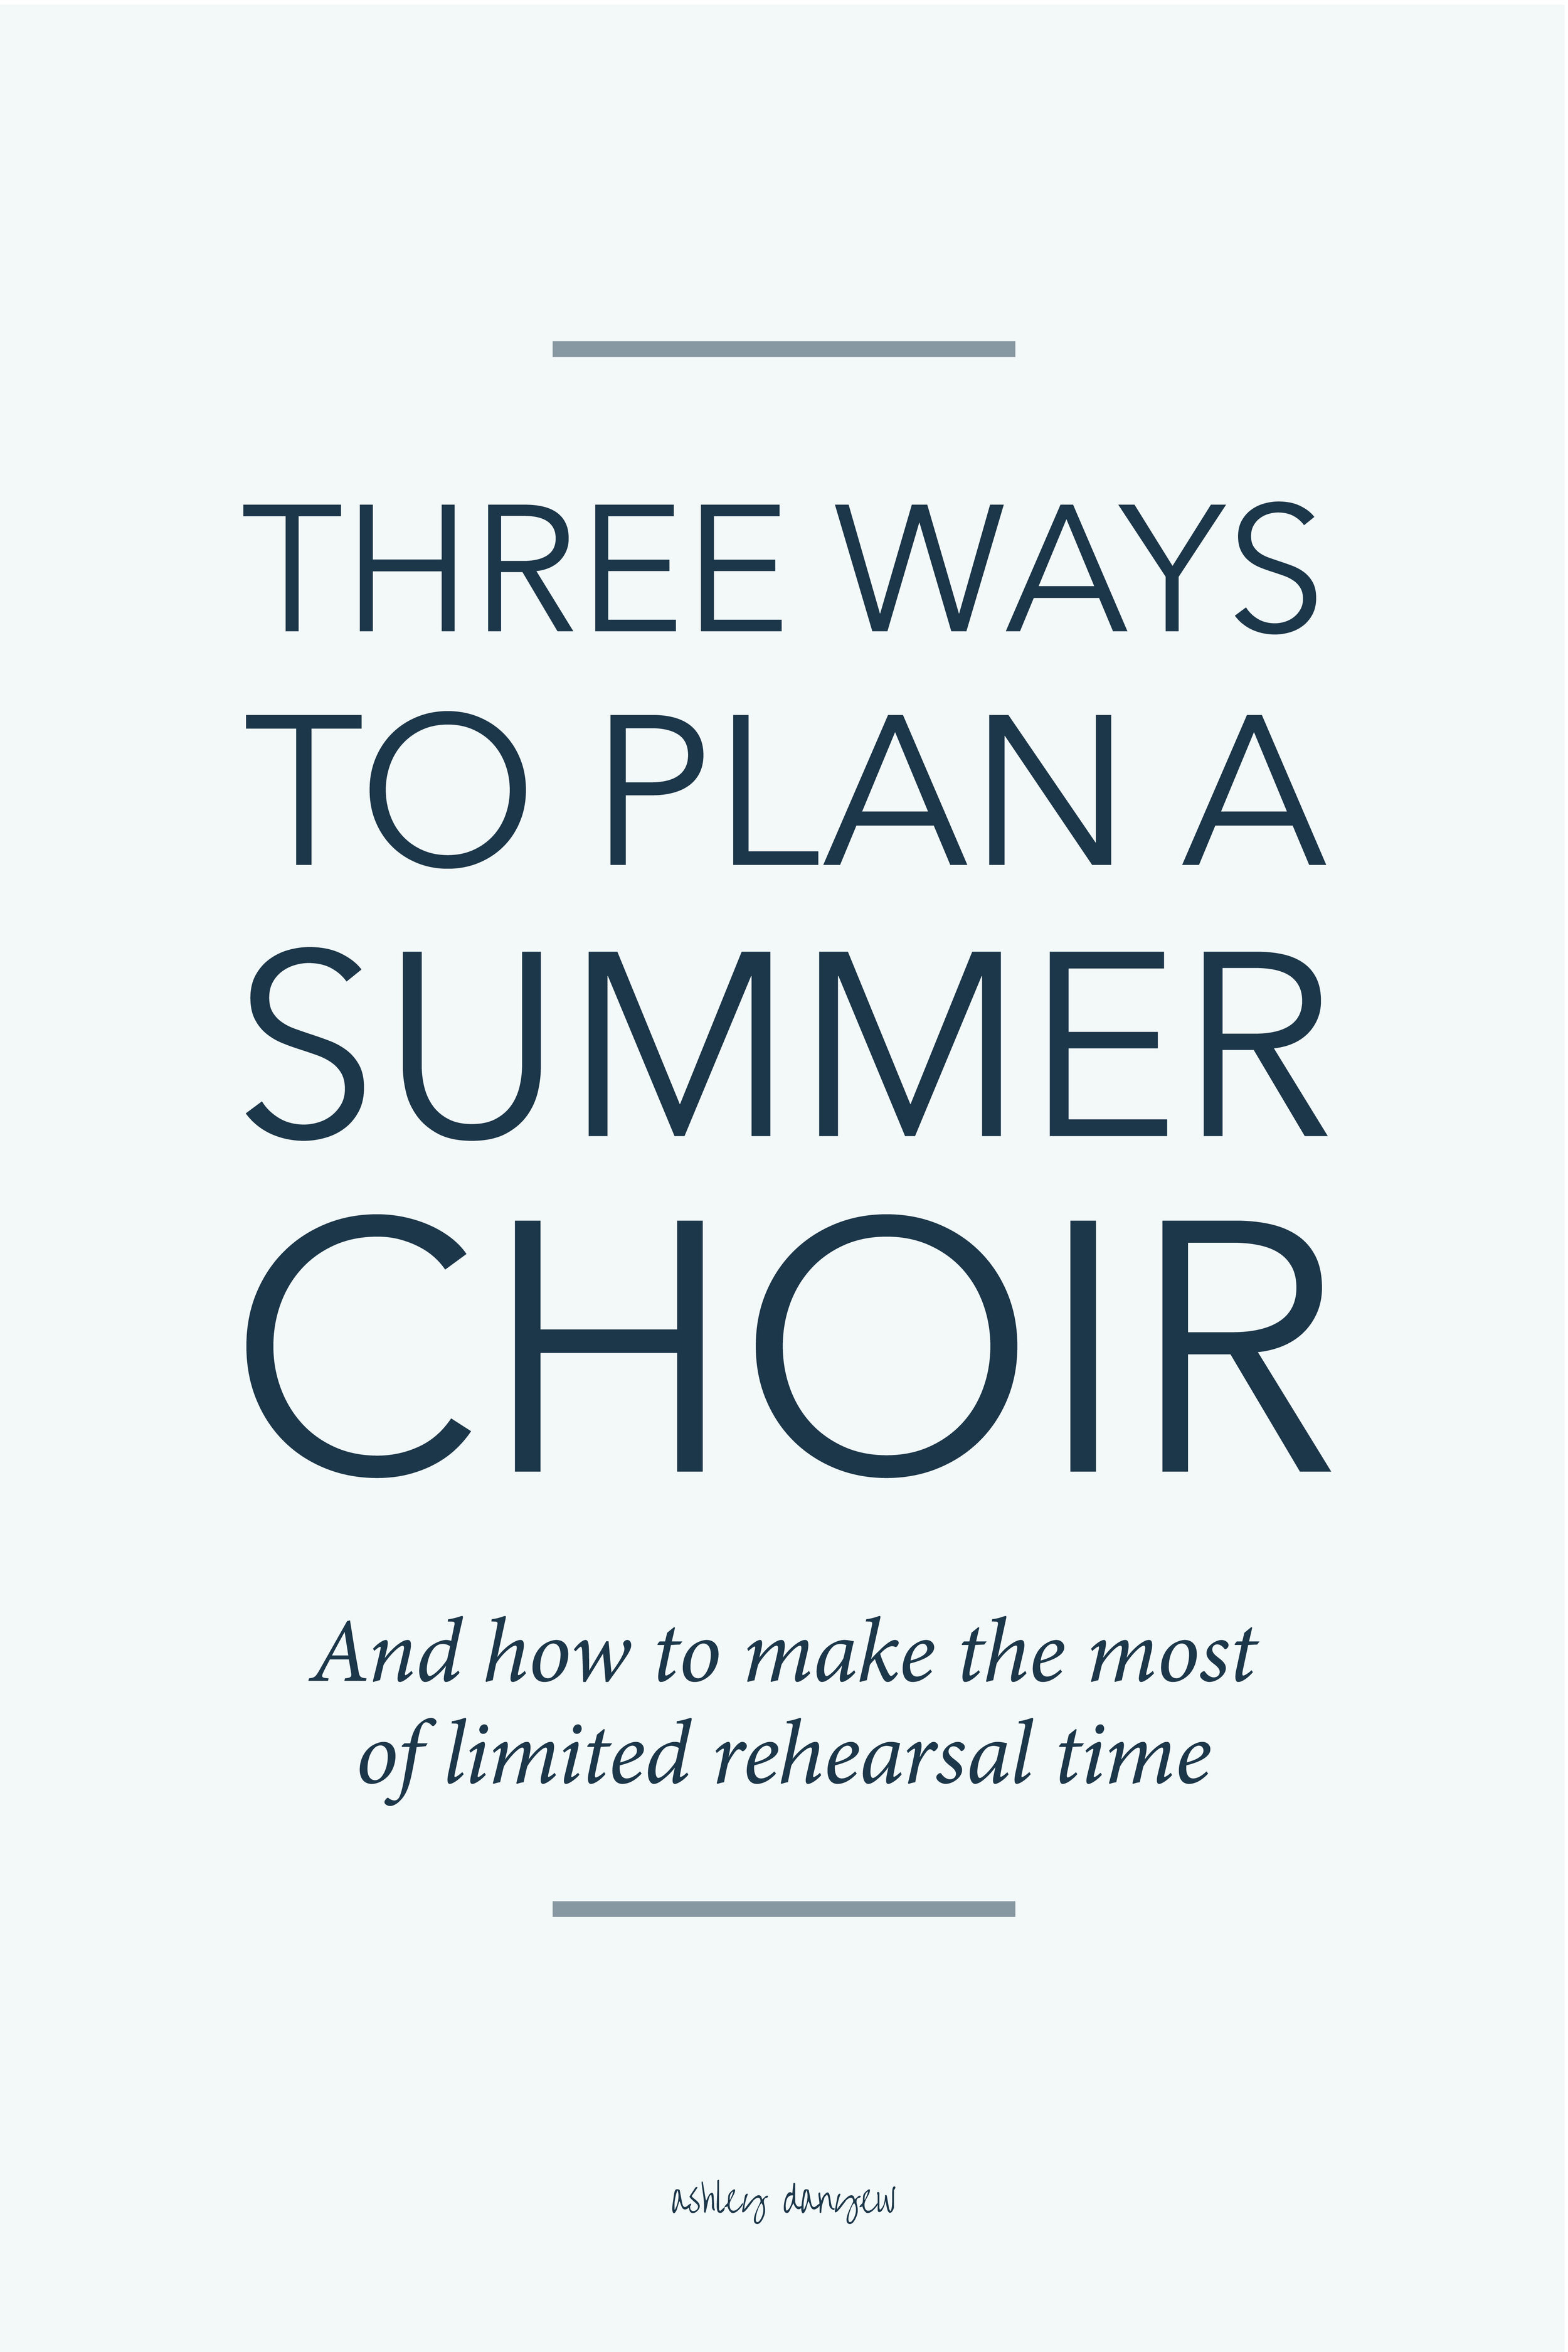 Three Ways to Plan a Summer Choir